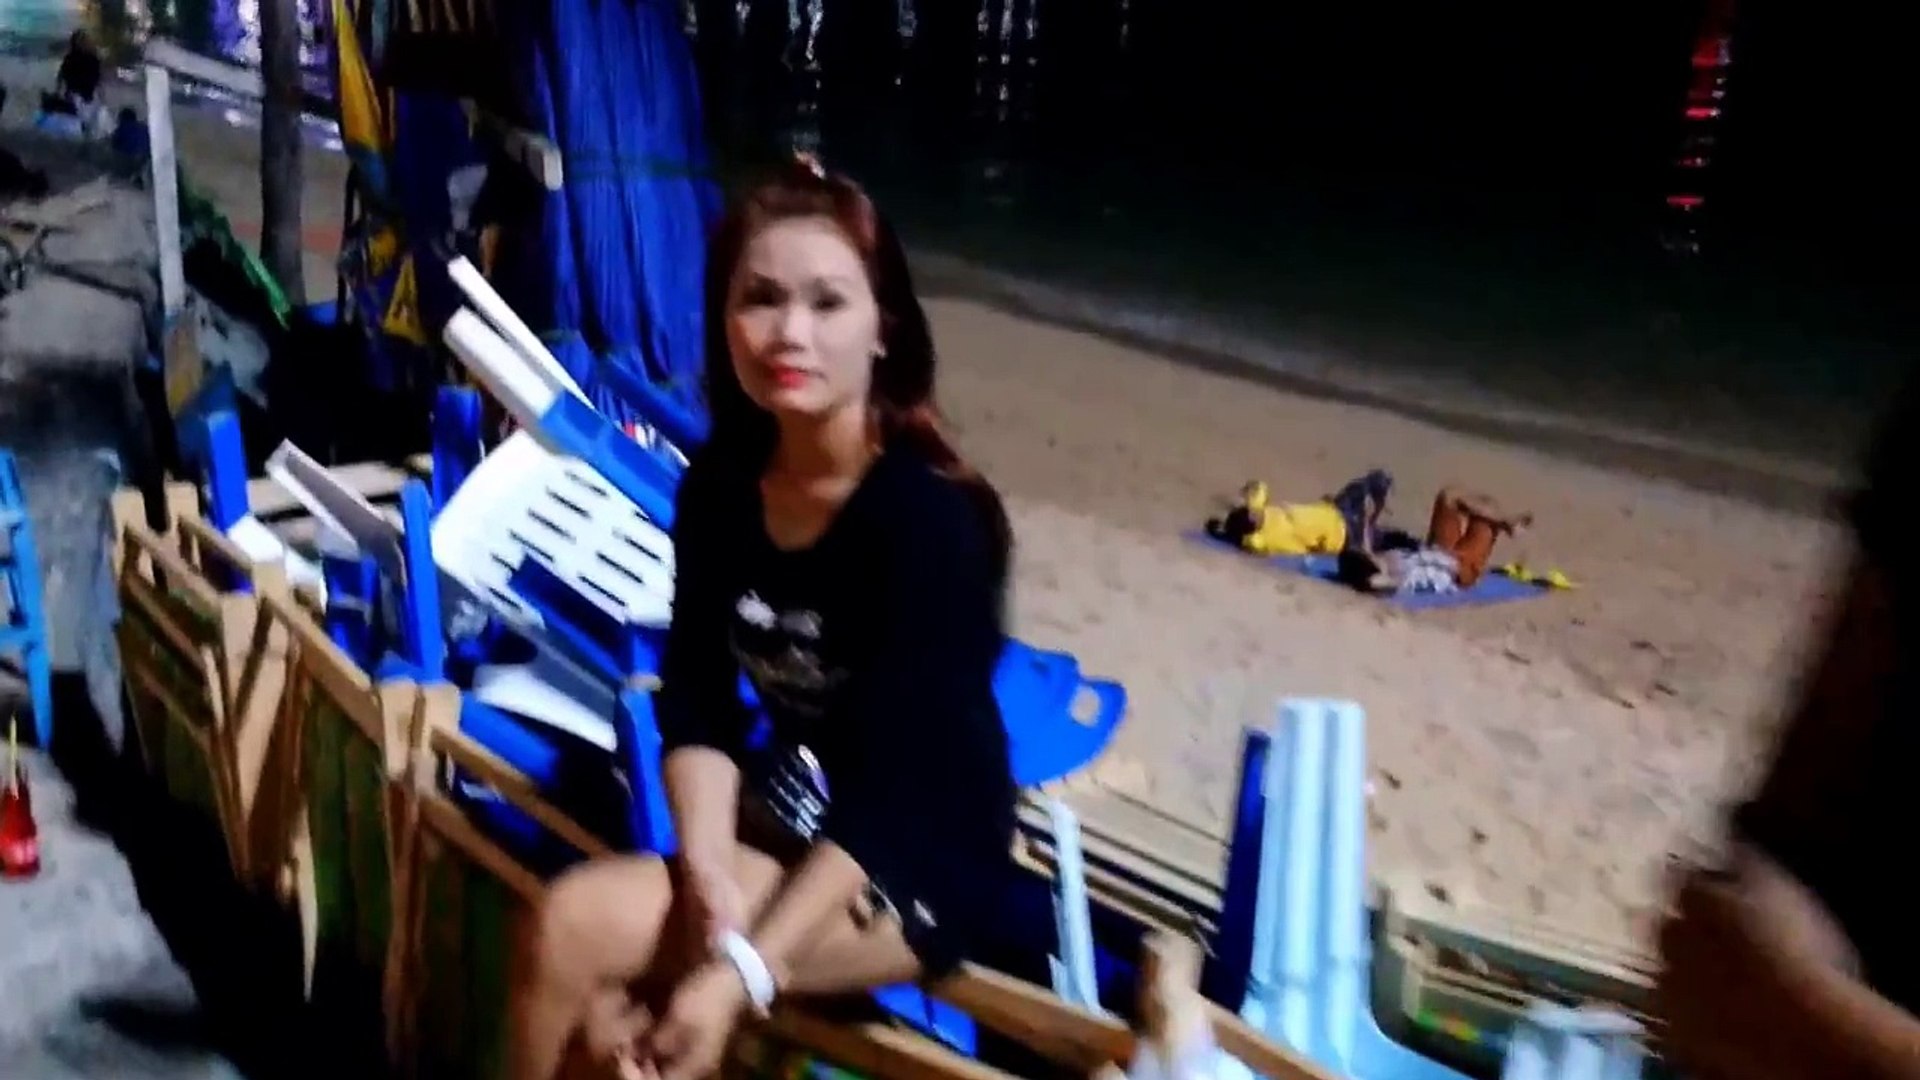 Patong Beach Nightlife - Street Scenes - Bangla Road - Phuket, Thailand 4K  HD - video Dailymotion